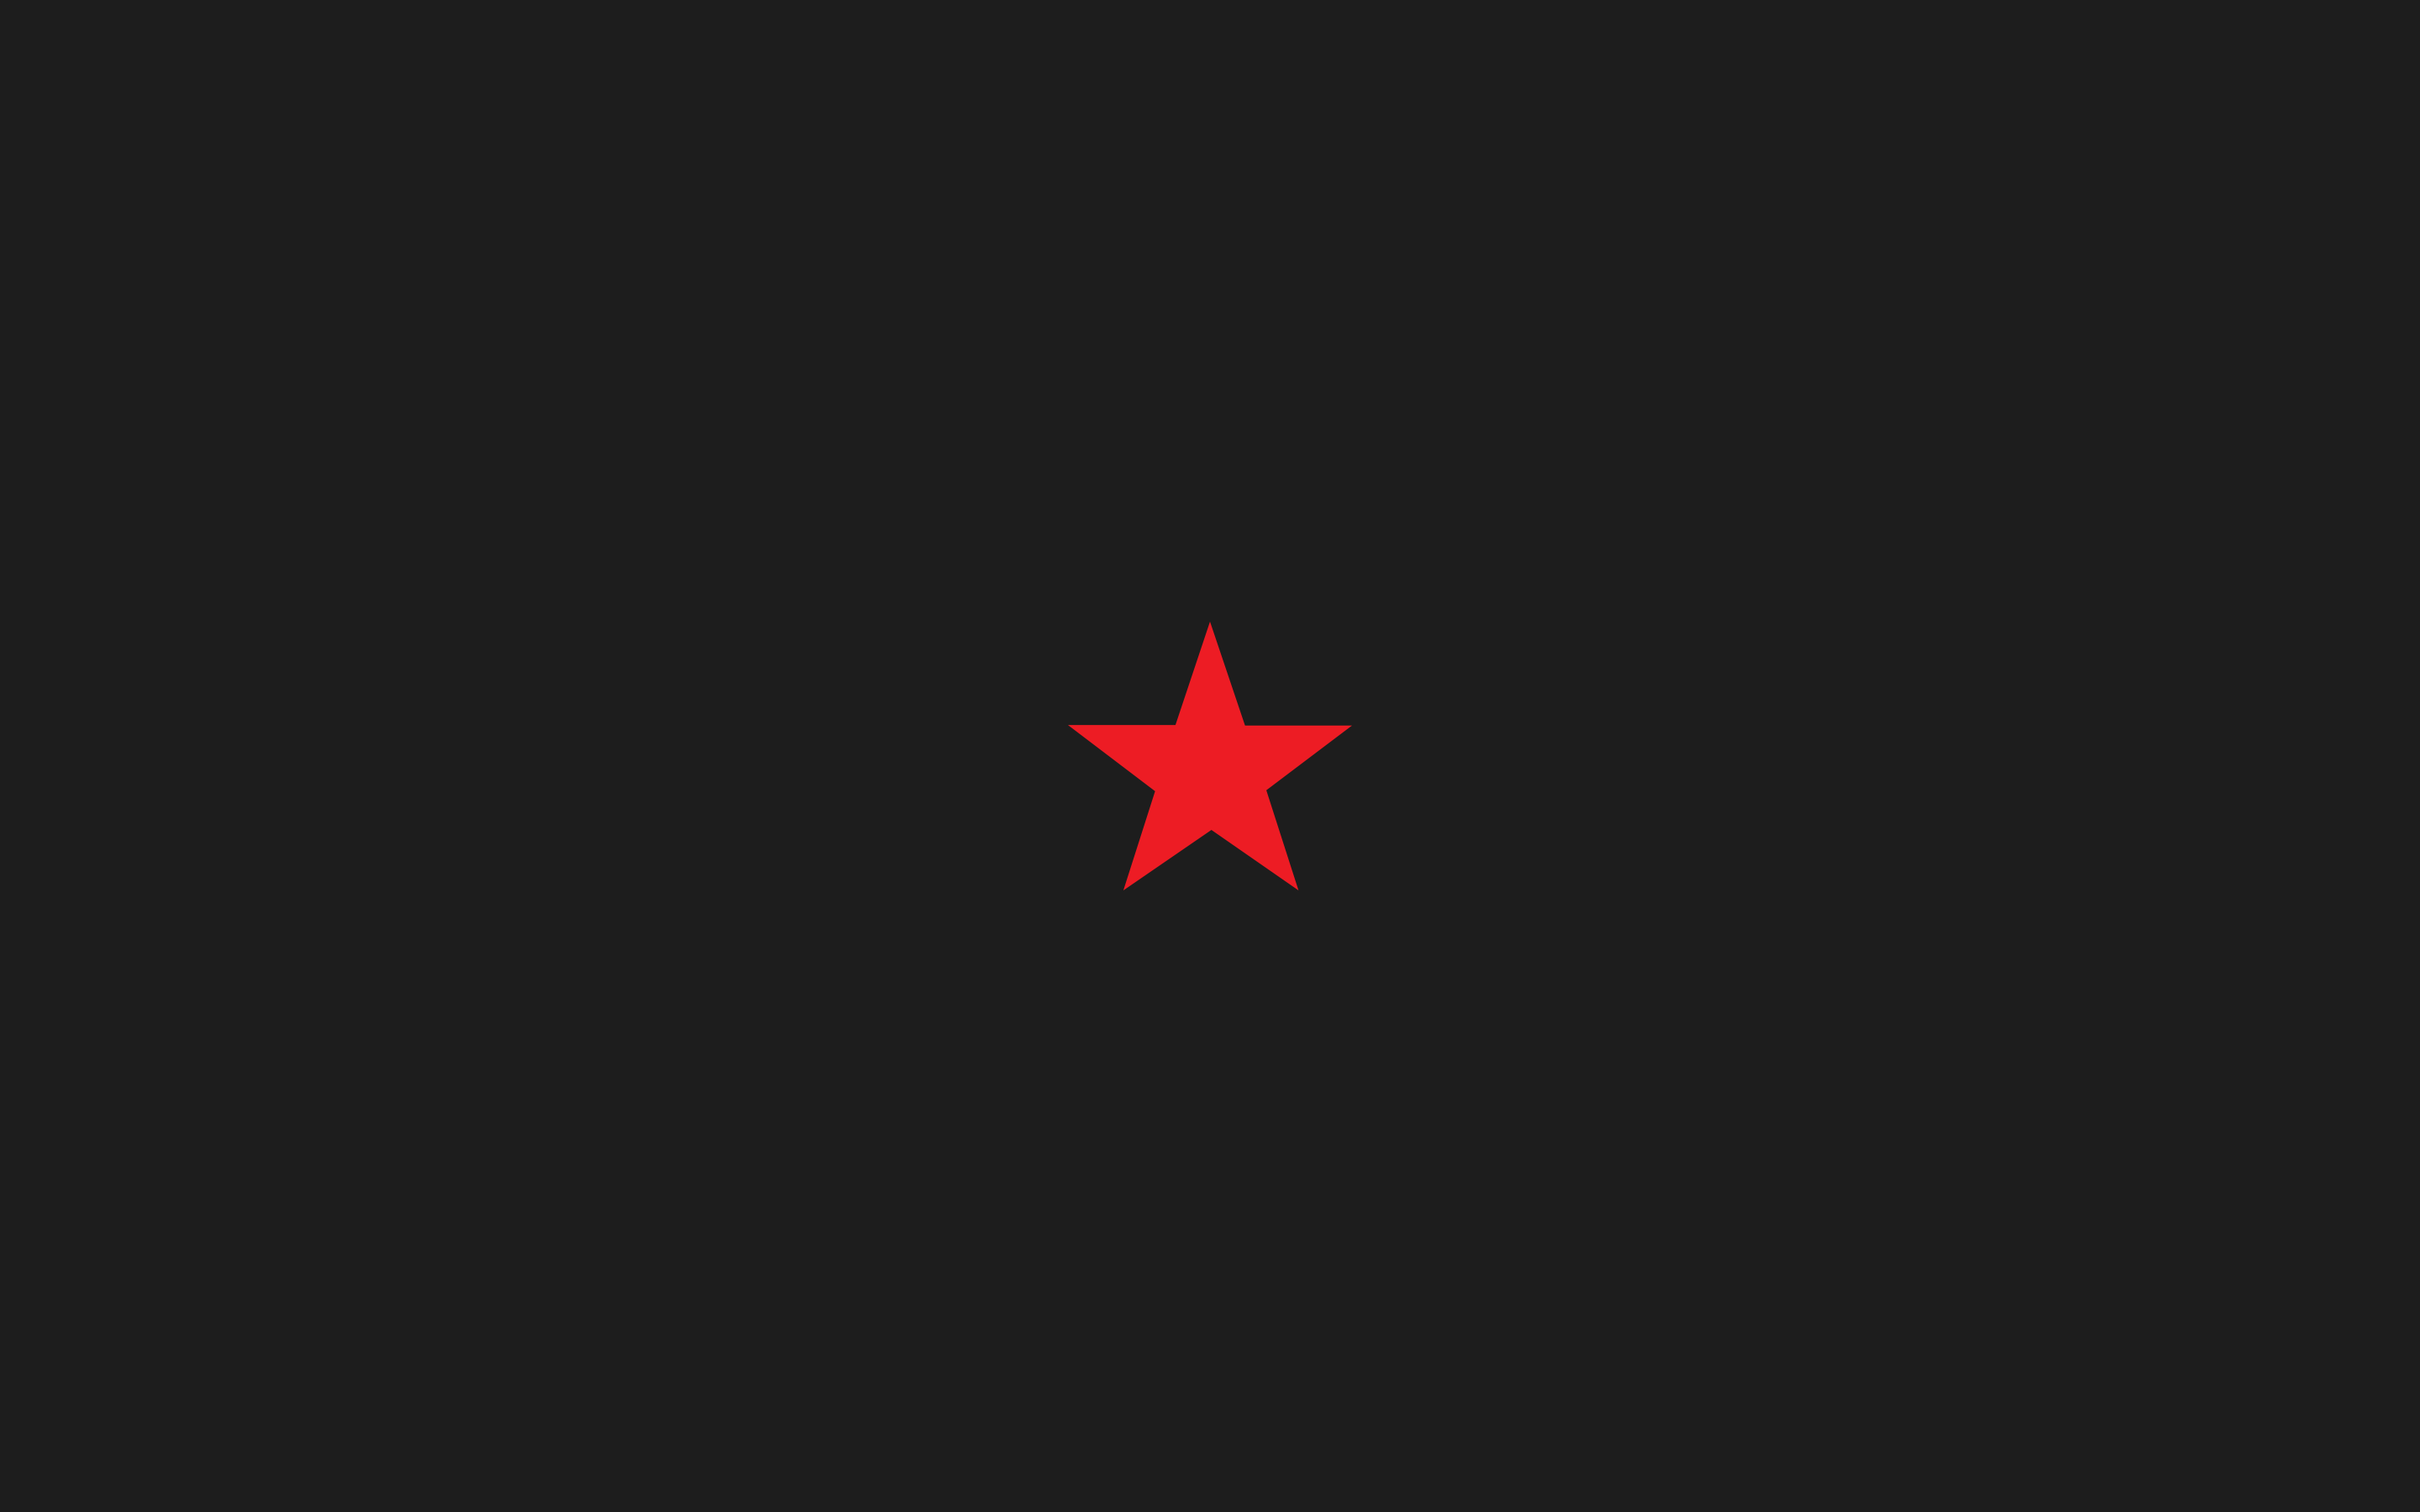 Digital Art Minimalism Stars Simple Simple Background Red Star Red Black Background Black 2880x1800